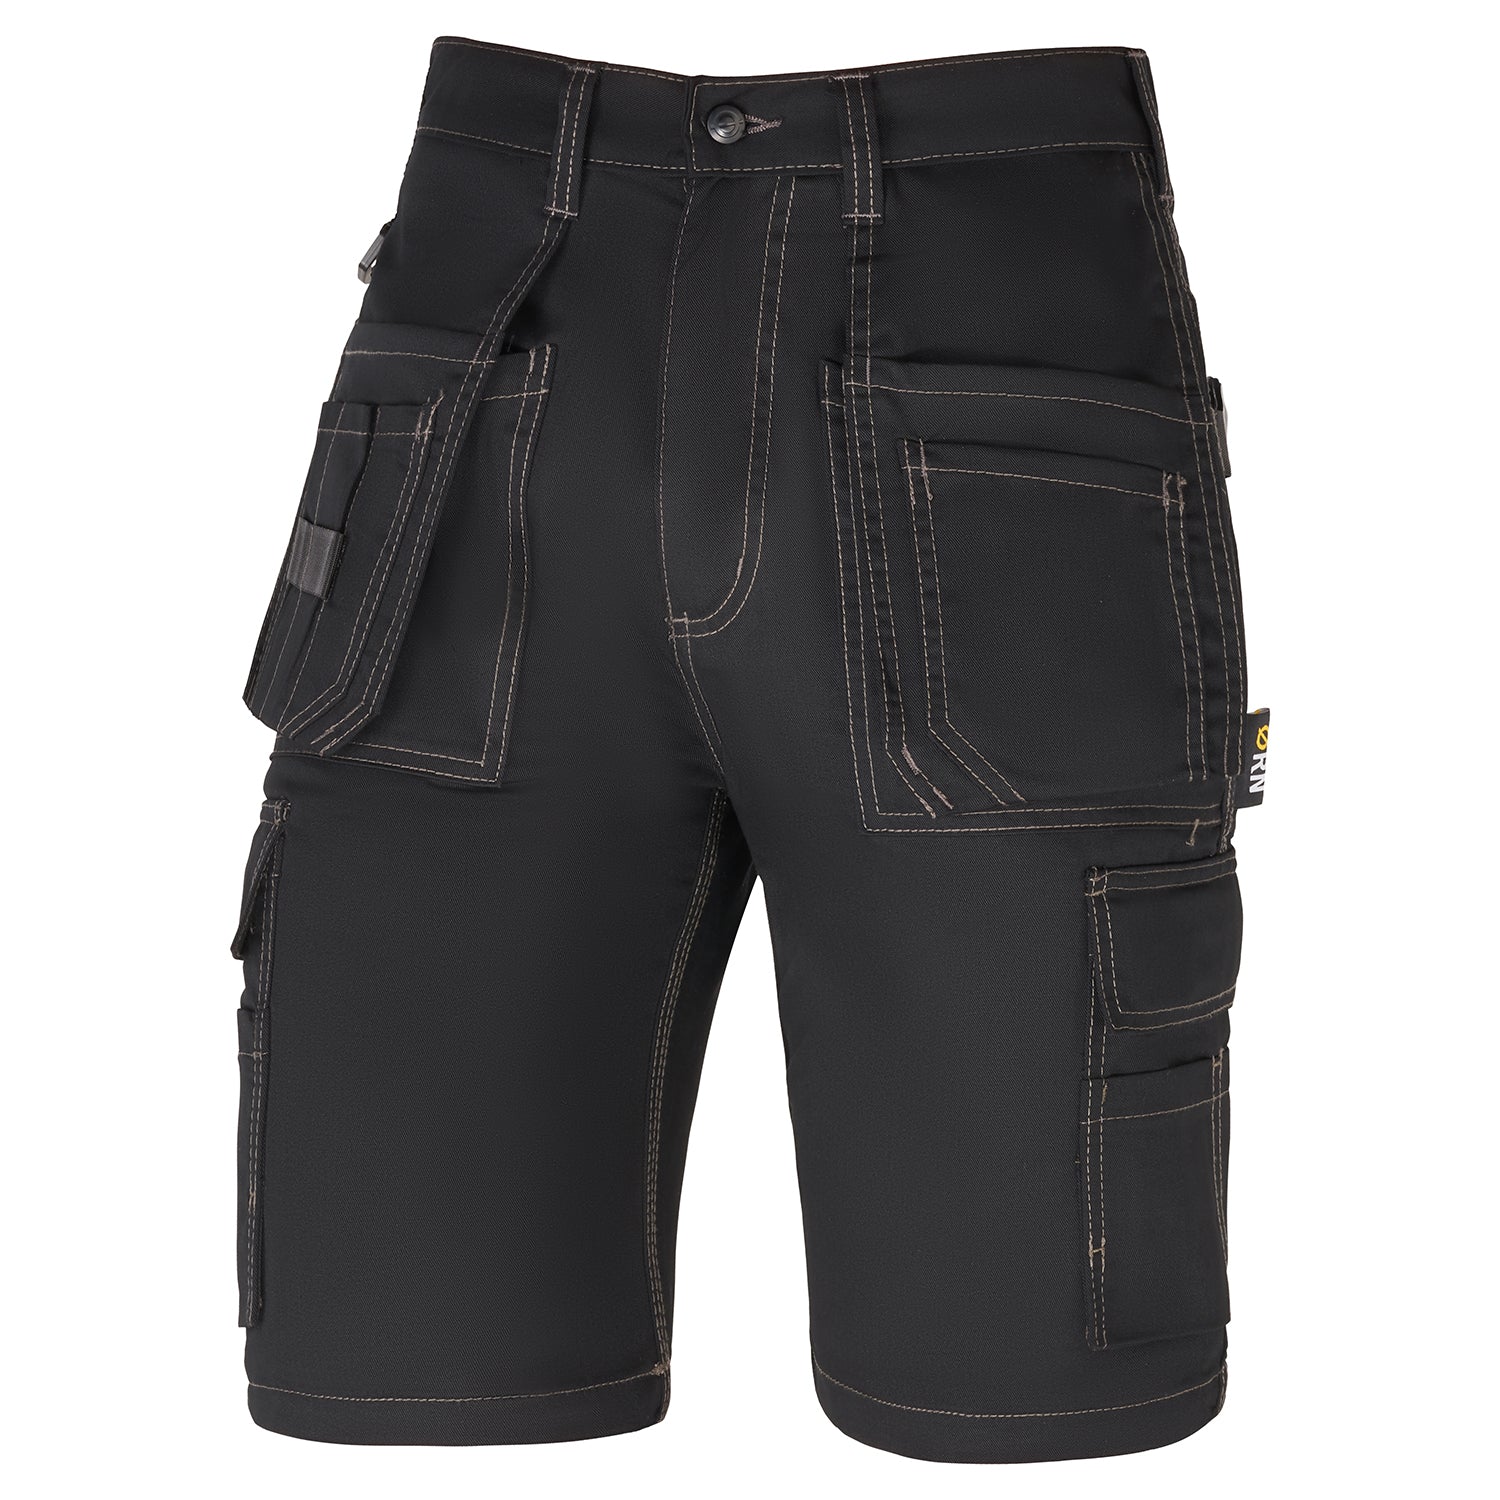 ORN Merlin Tradesman Shorts - Black